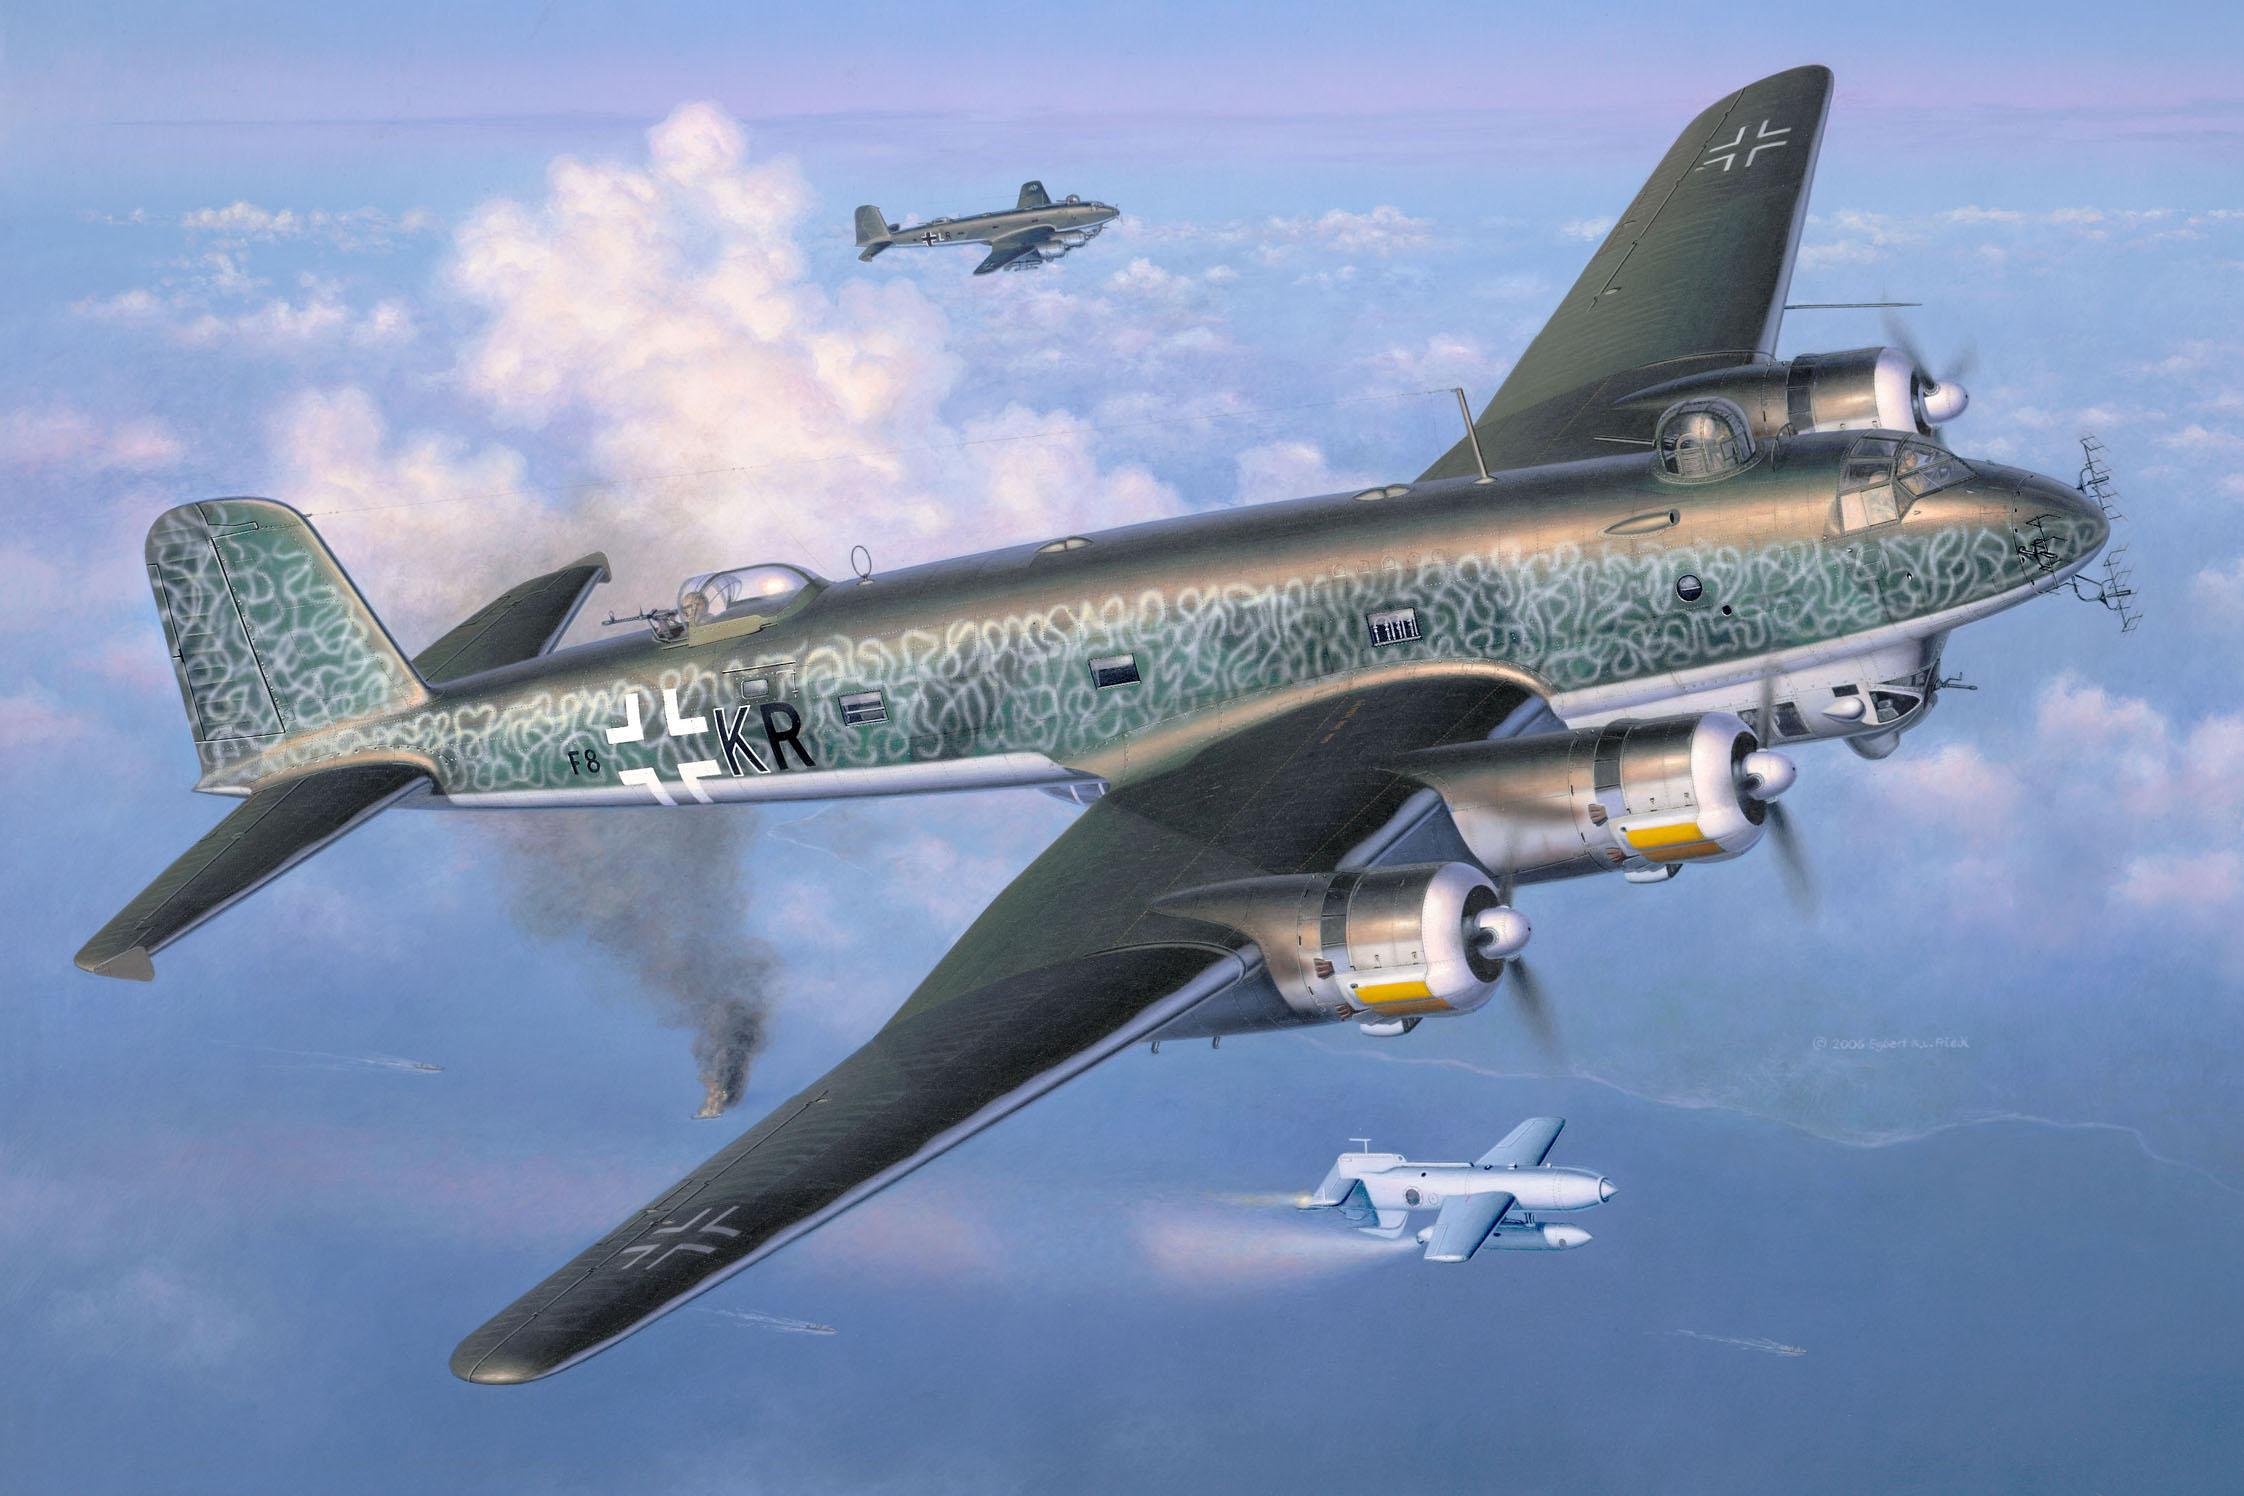 HD wallpaper, German Aircraft, Atlantic Ocean, War, Bomber, Focke Wulf, Luftwaffe, Germany, Aircraft, Focke Wulf 200 Condor, Airplane, Military, World War Ii